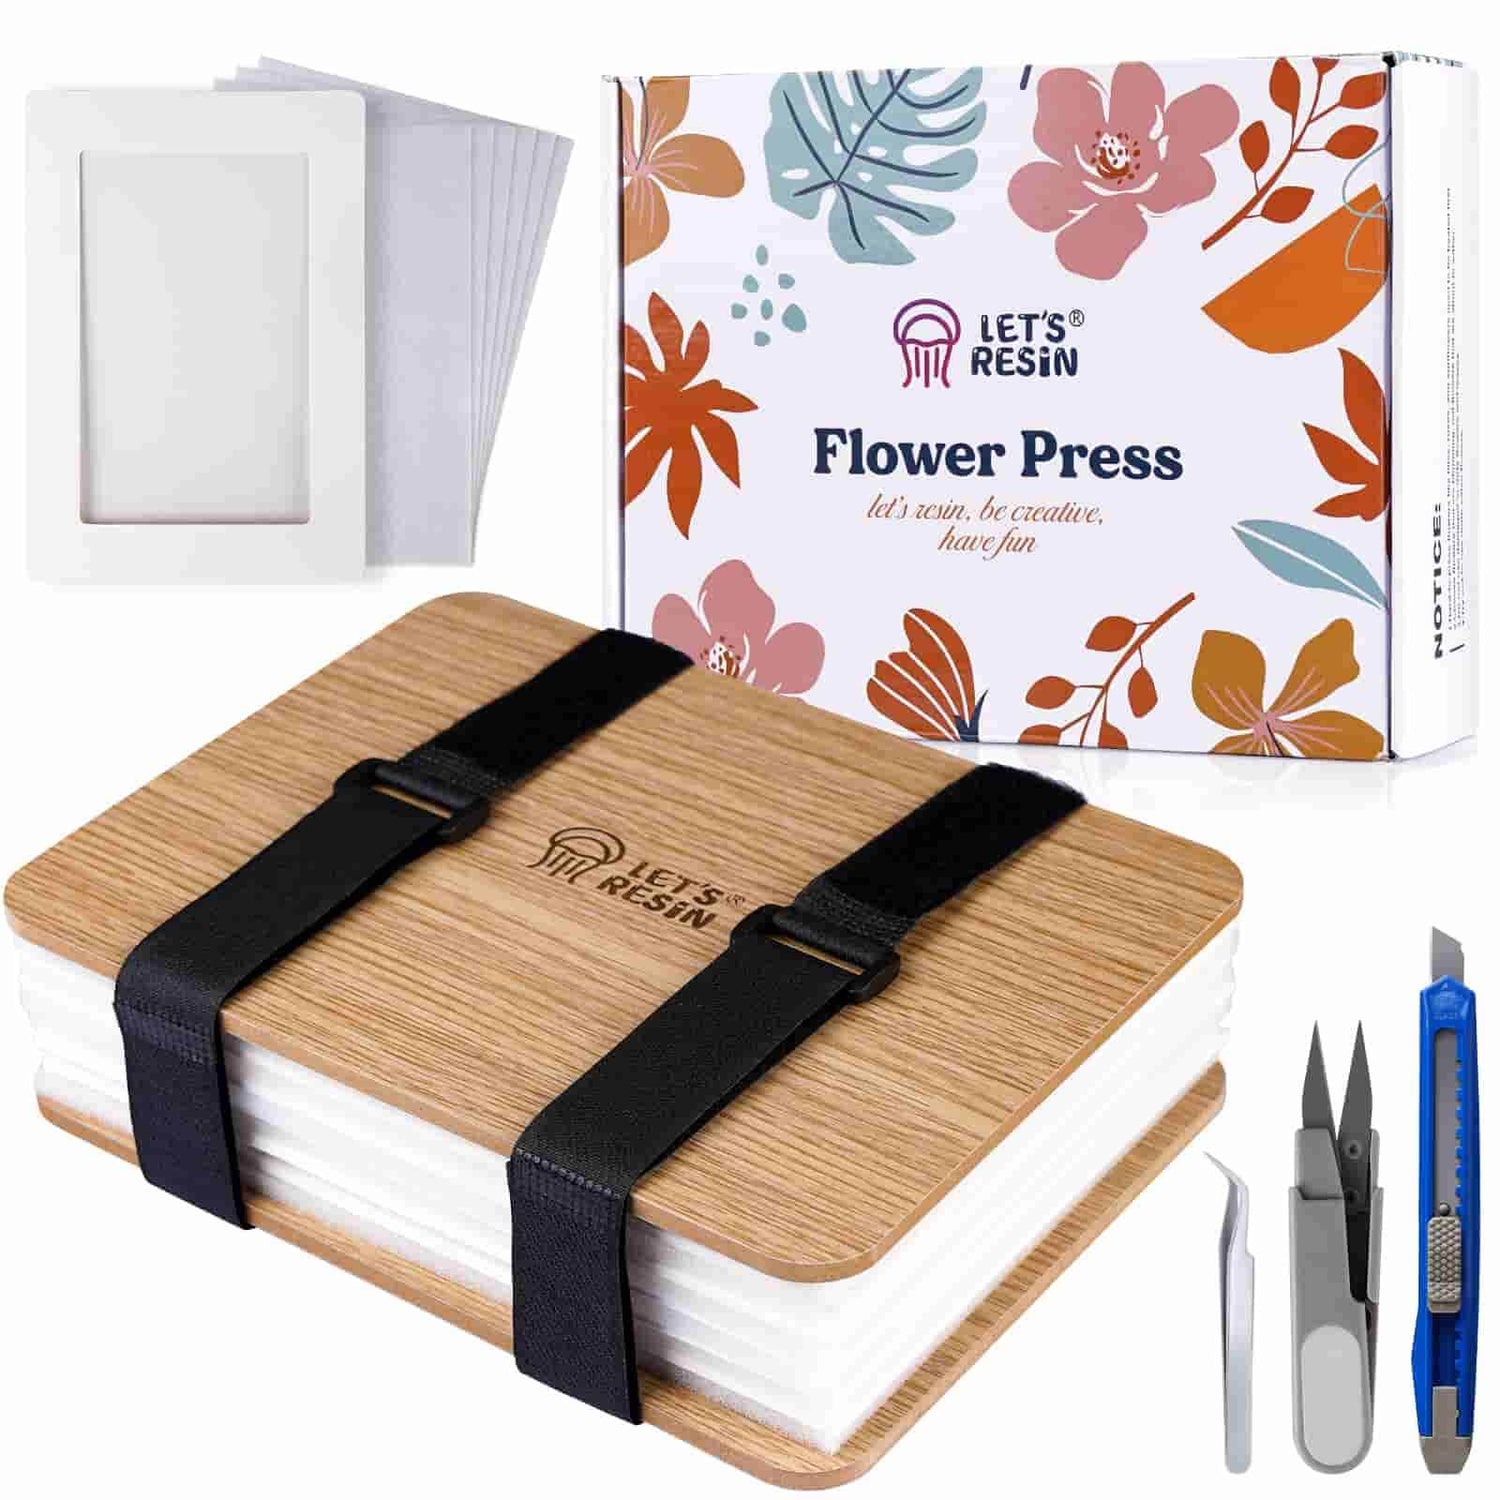 Professional Flower Press Kit